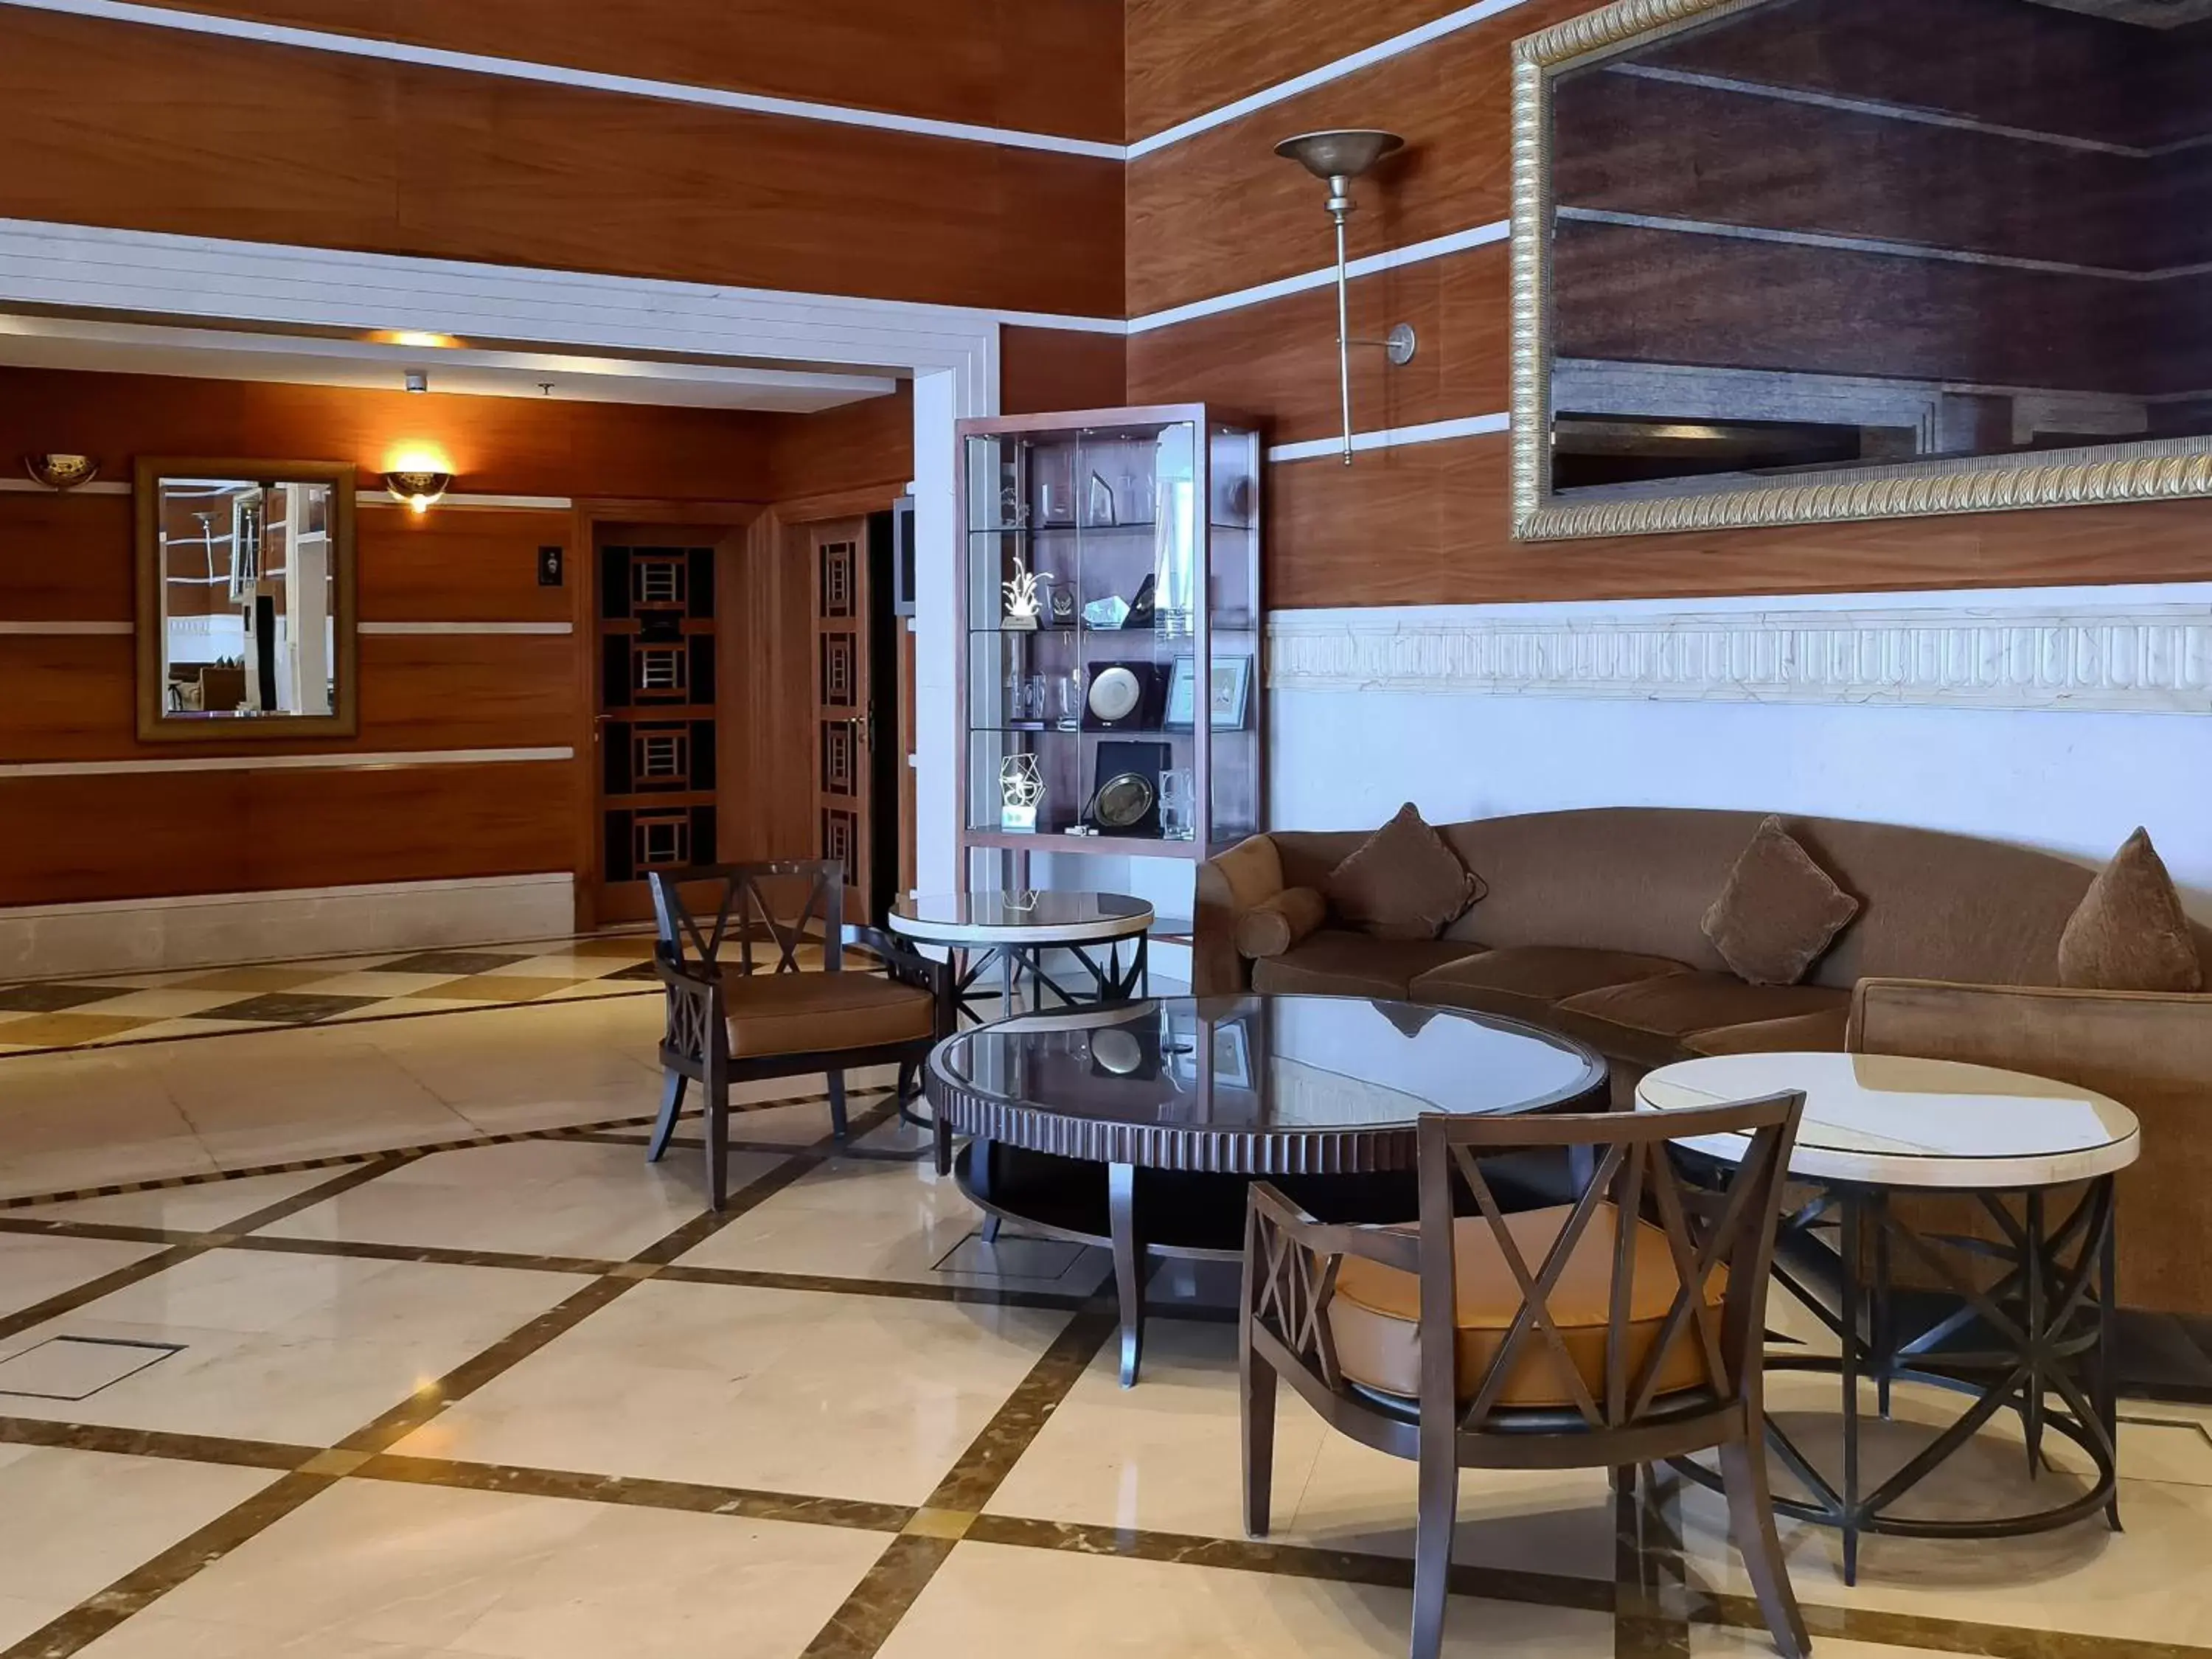 Lobby or reception in Corniche Hotel Sharjah